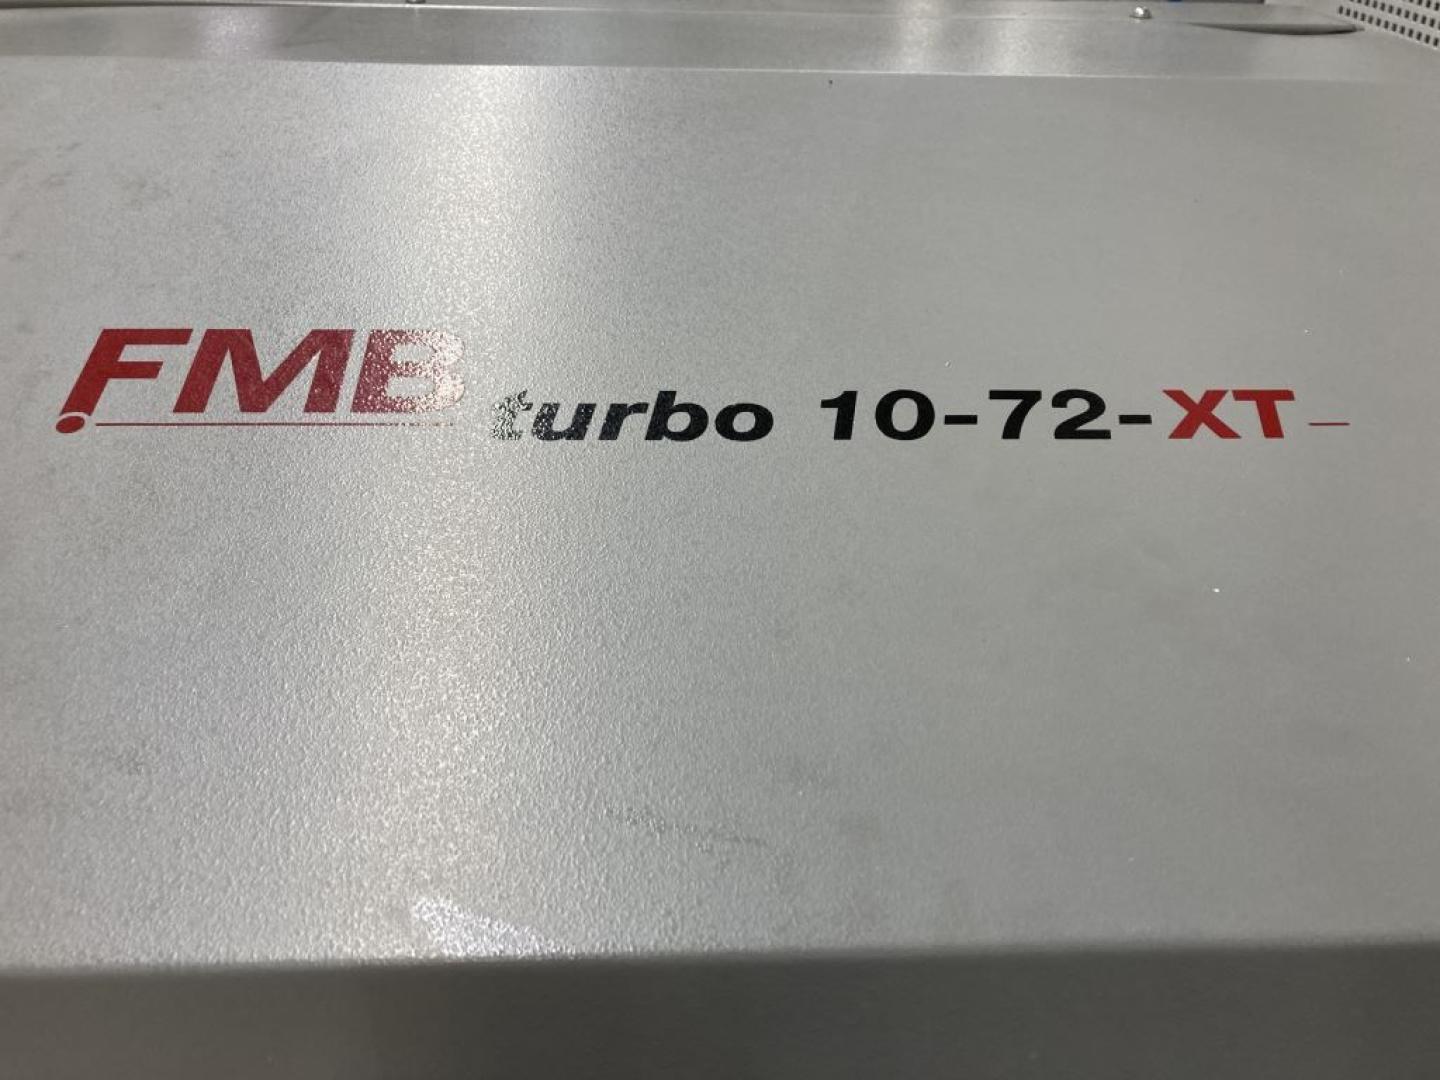 gebrauchte Maschinen sofort verfügbar Stangenlademagazin FMB  Turbo 10-72 XT /3200 